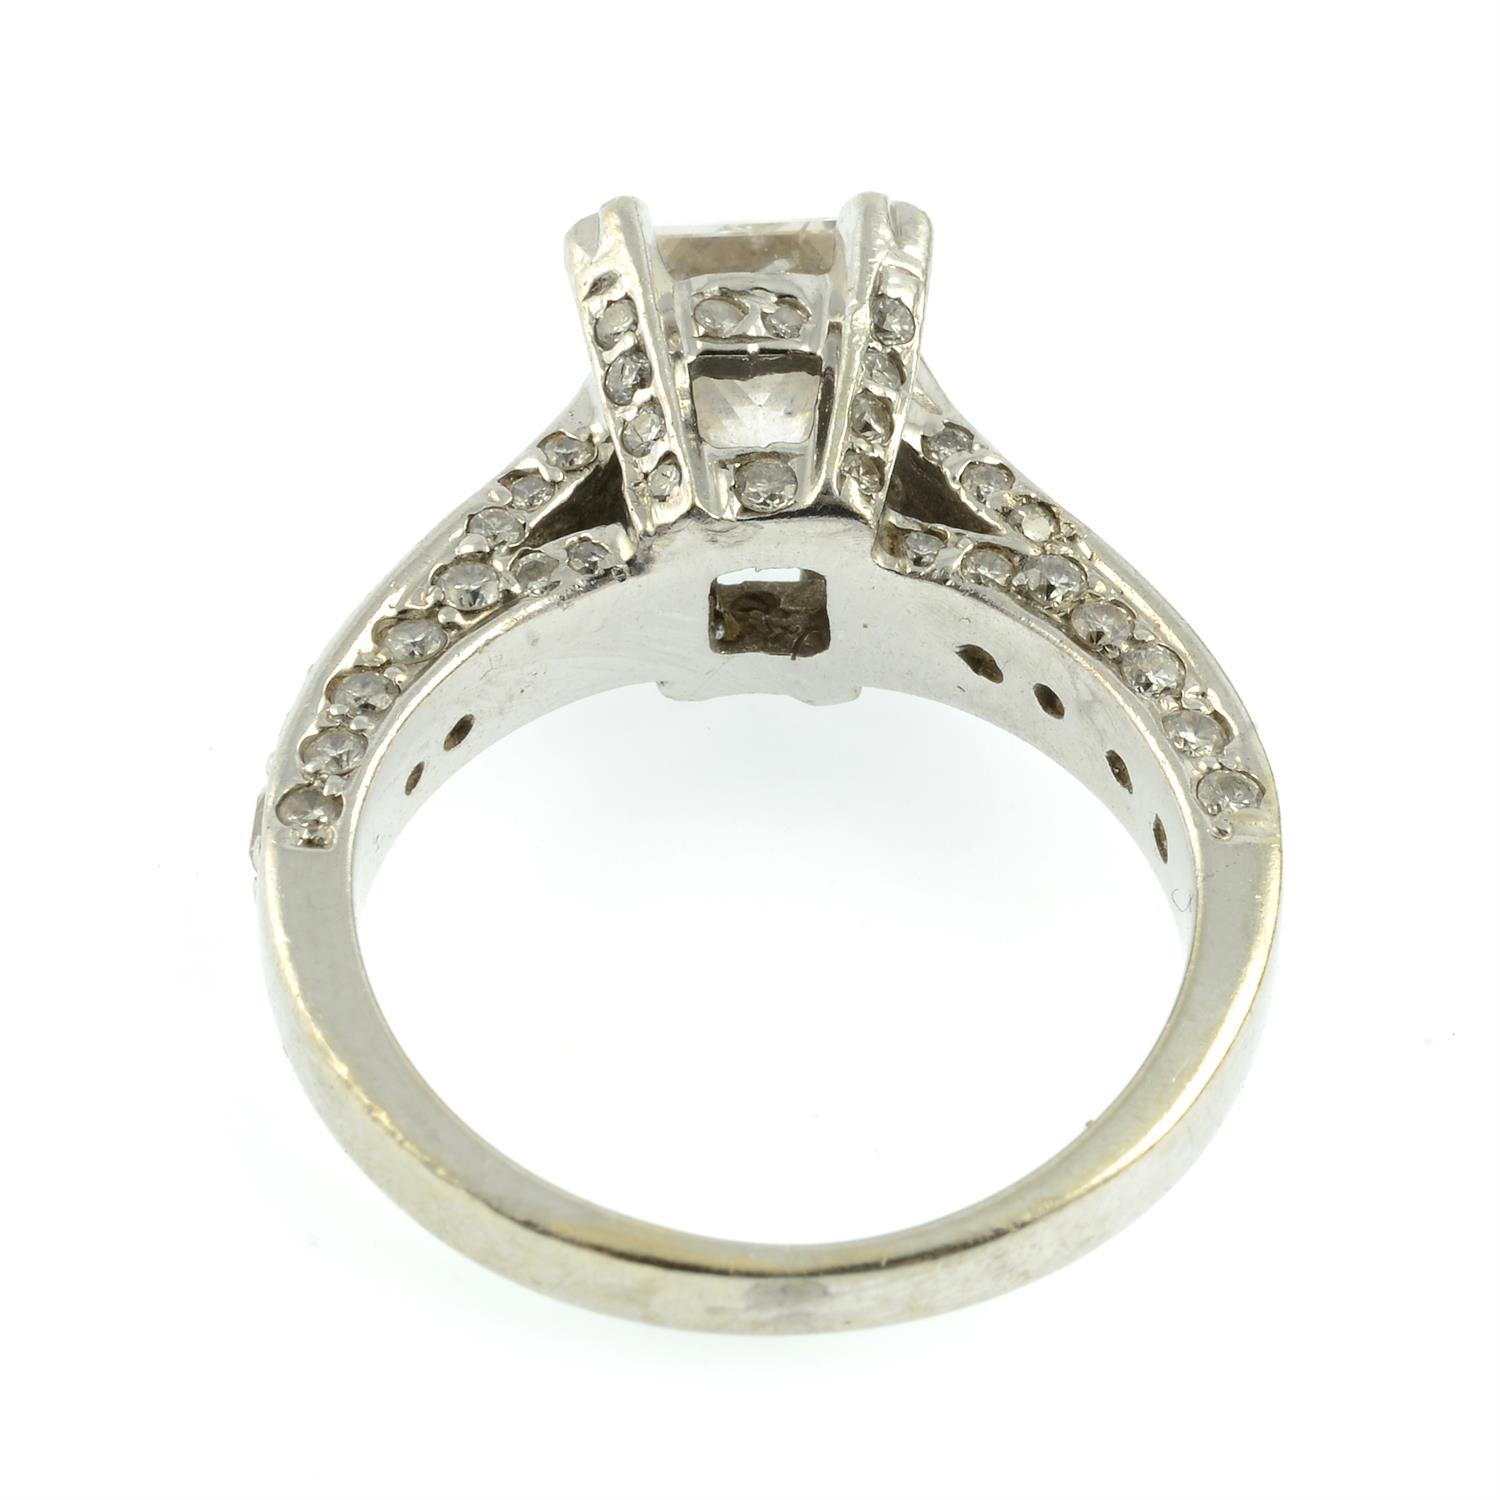 Rectangular-shape diamond ring - Image 4 of 6